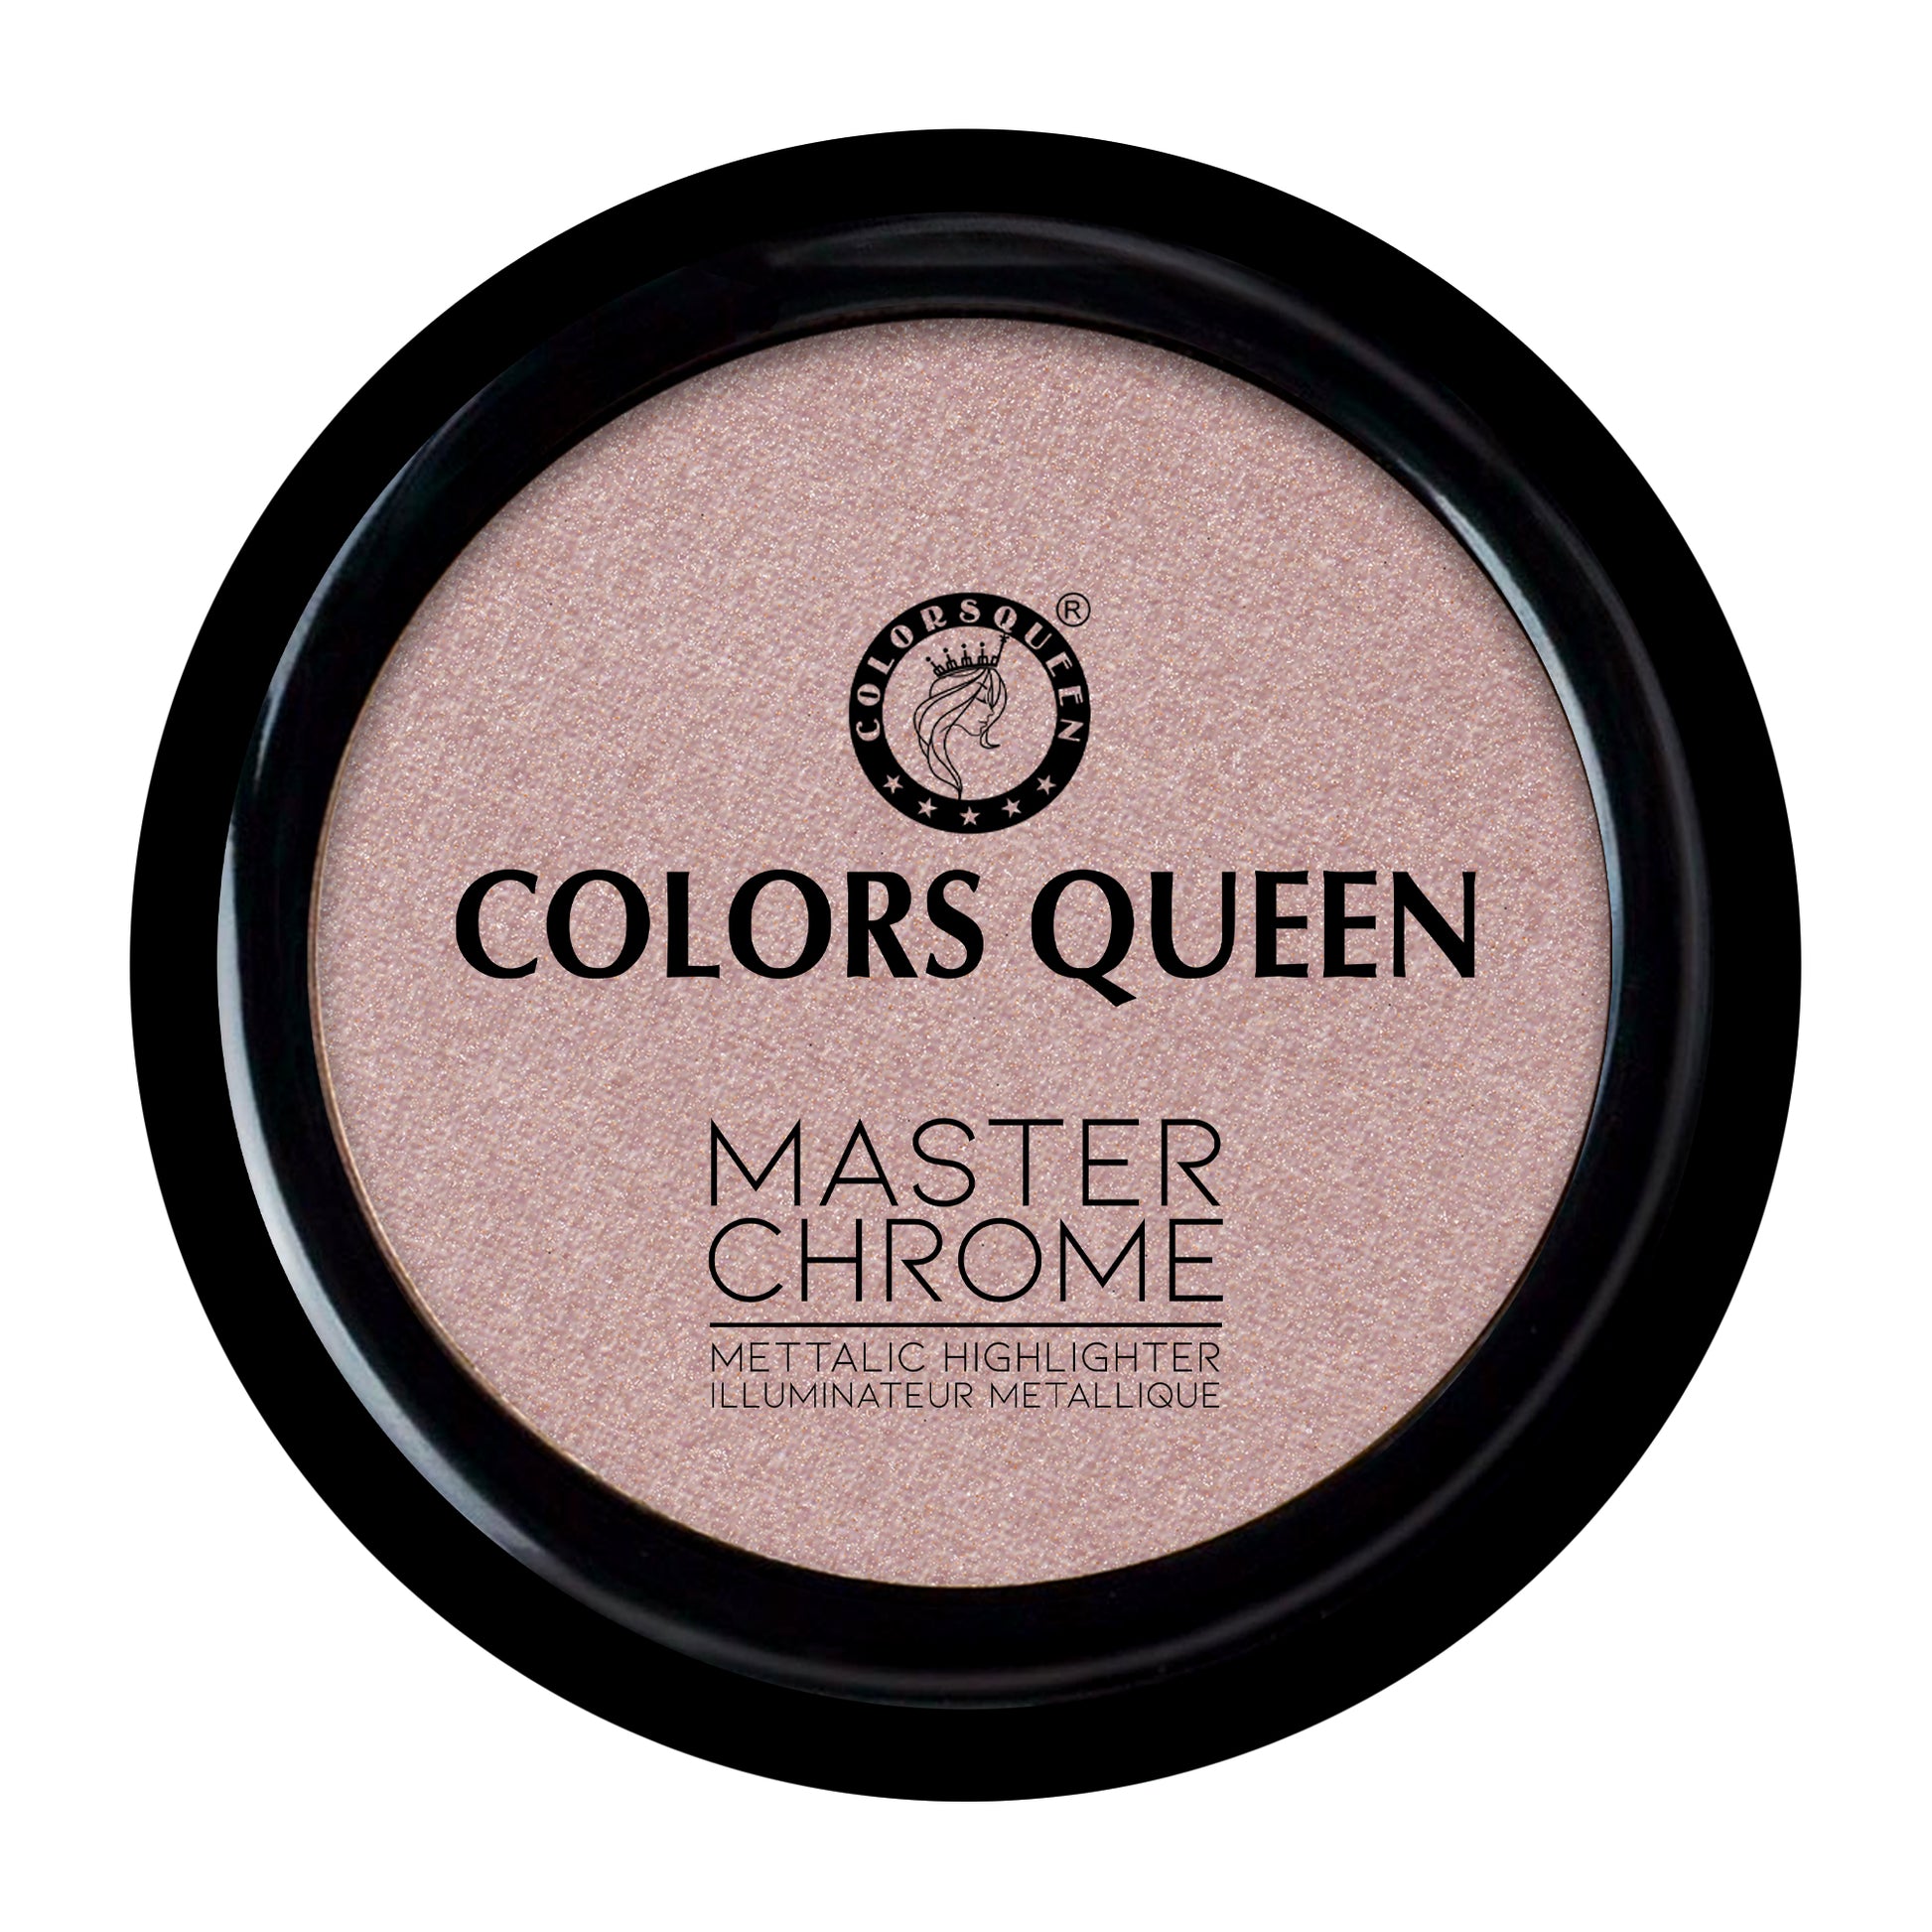 Colors Queen Master Chrome Metallic Highlighter